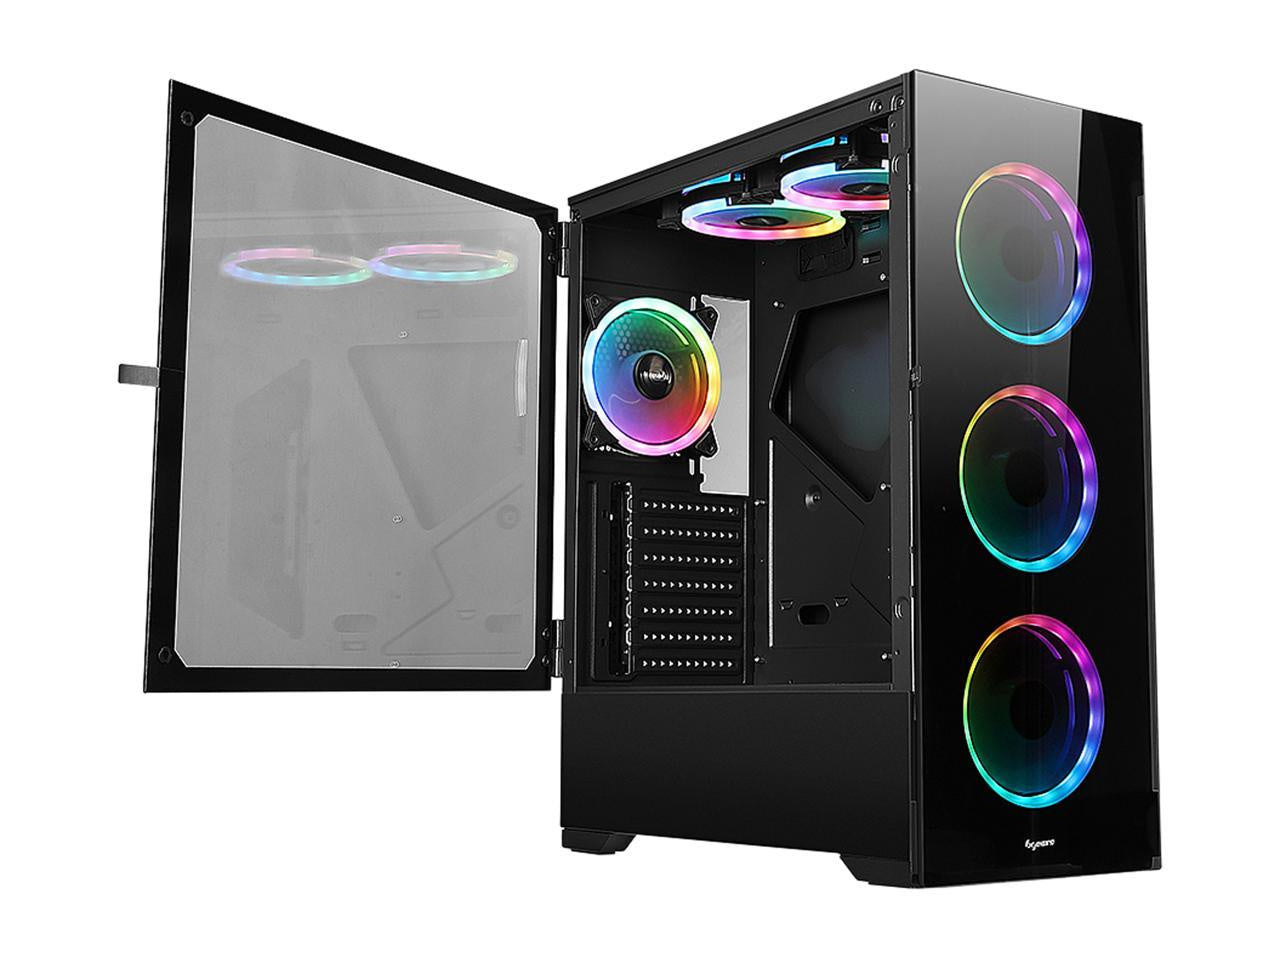 BGears b-Voguish RGB Gaming PC with Tempered Glass ATX Mid Tower, USB3.0, Support E-ATX, ATX, mATX, ITX